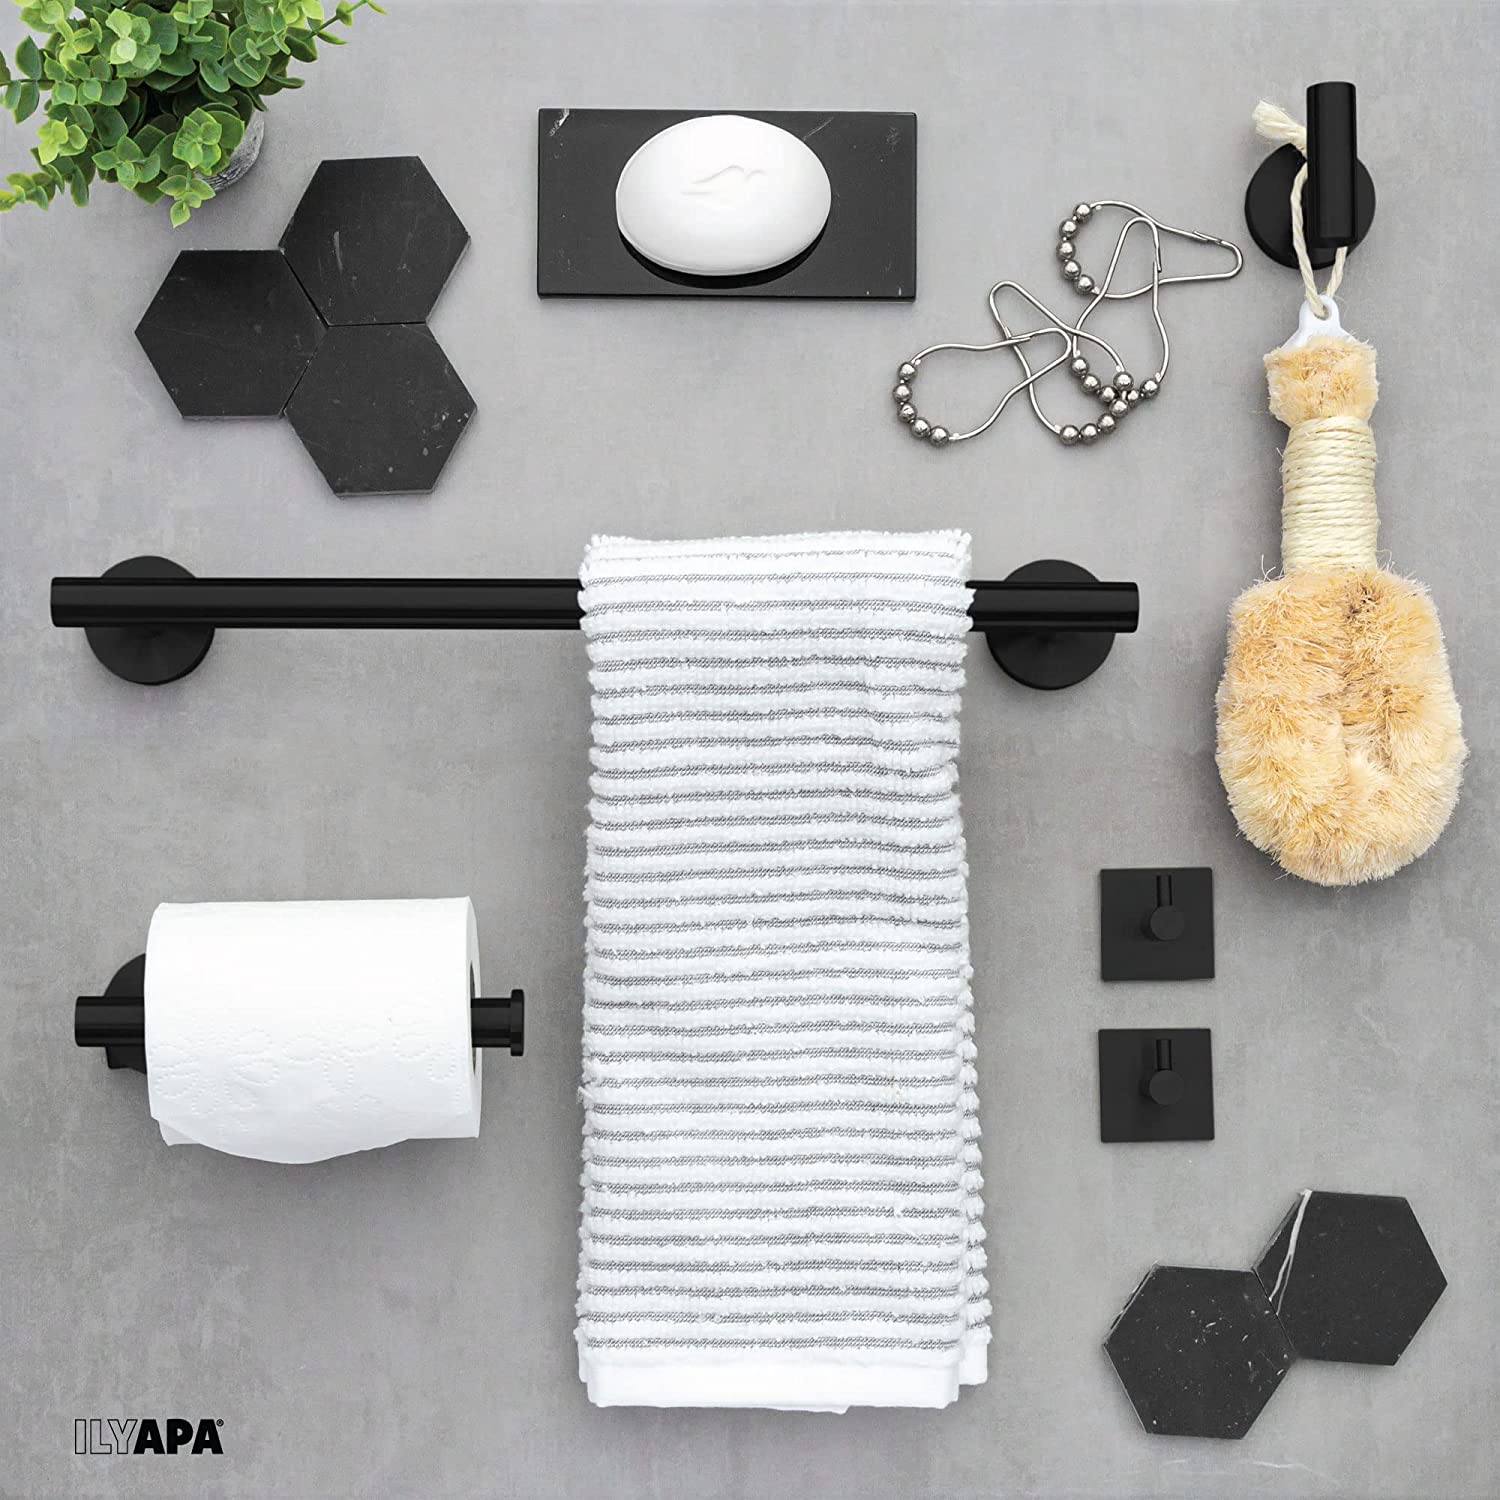 Ilyapa 3 Piece Matte Black Wall Mounted Bathroom Hardware Set - Towel Bar, 1 Big Hook, 2 Small Hooks, Toilet Paper Holder, with Mounting Hardware